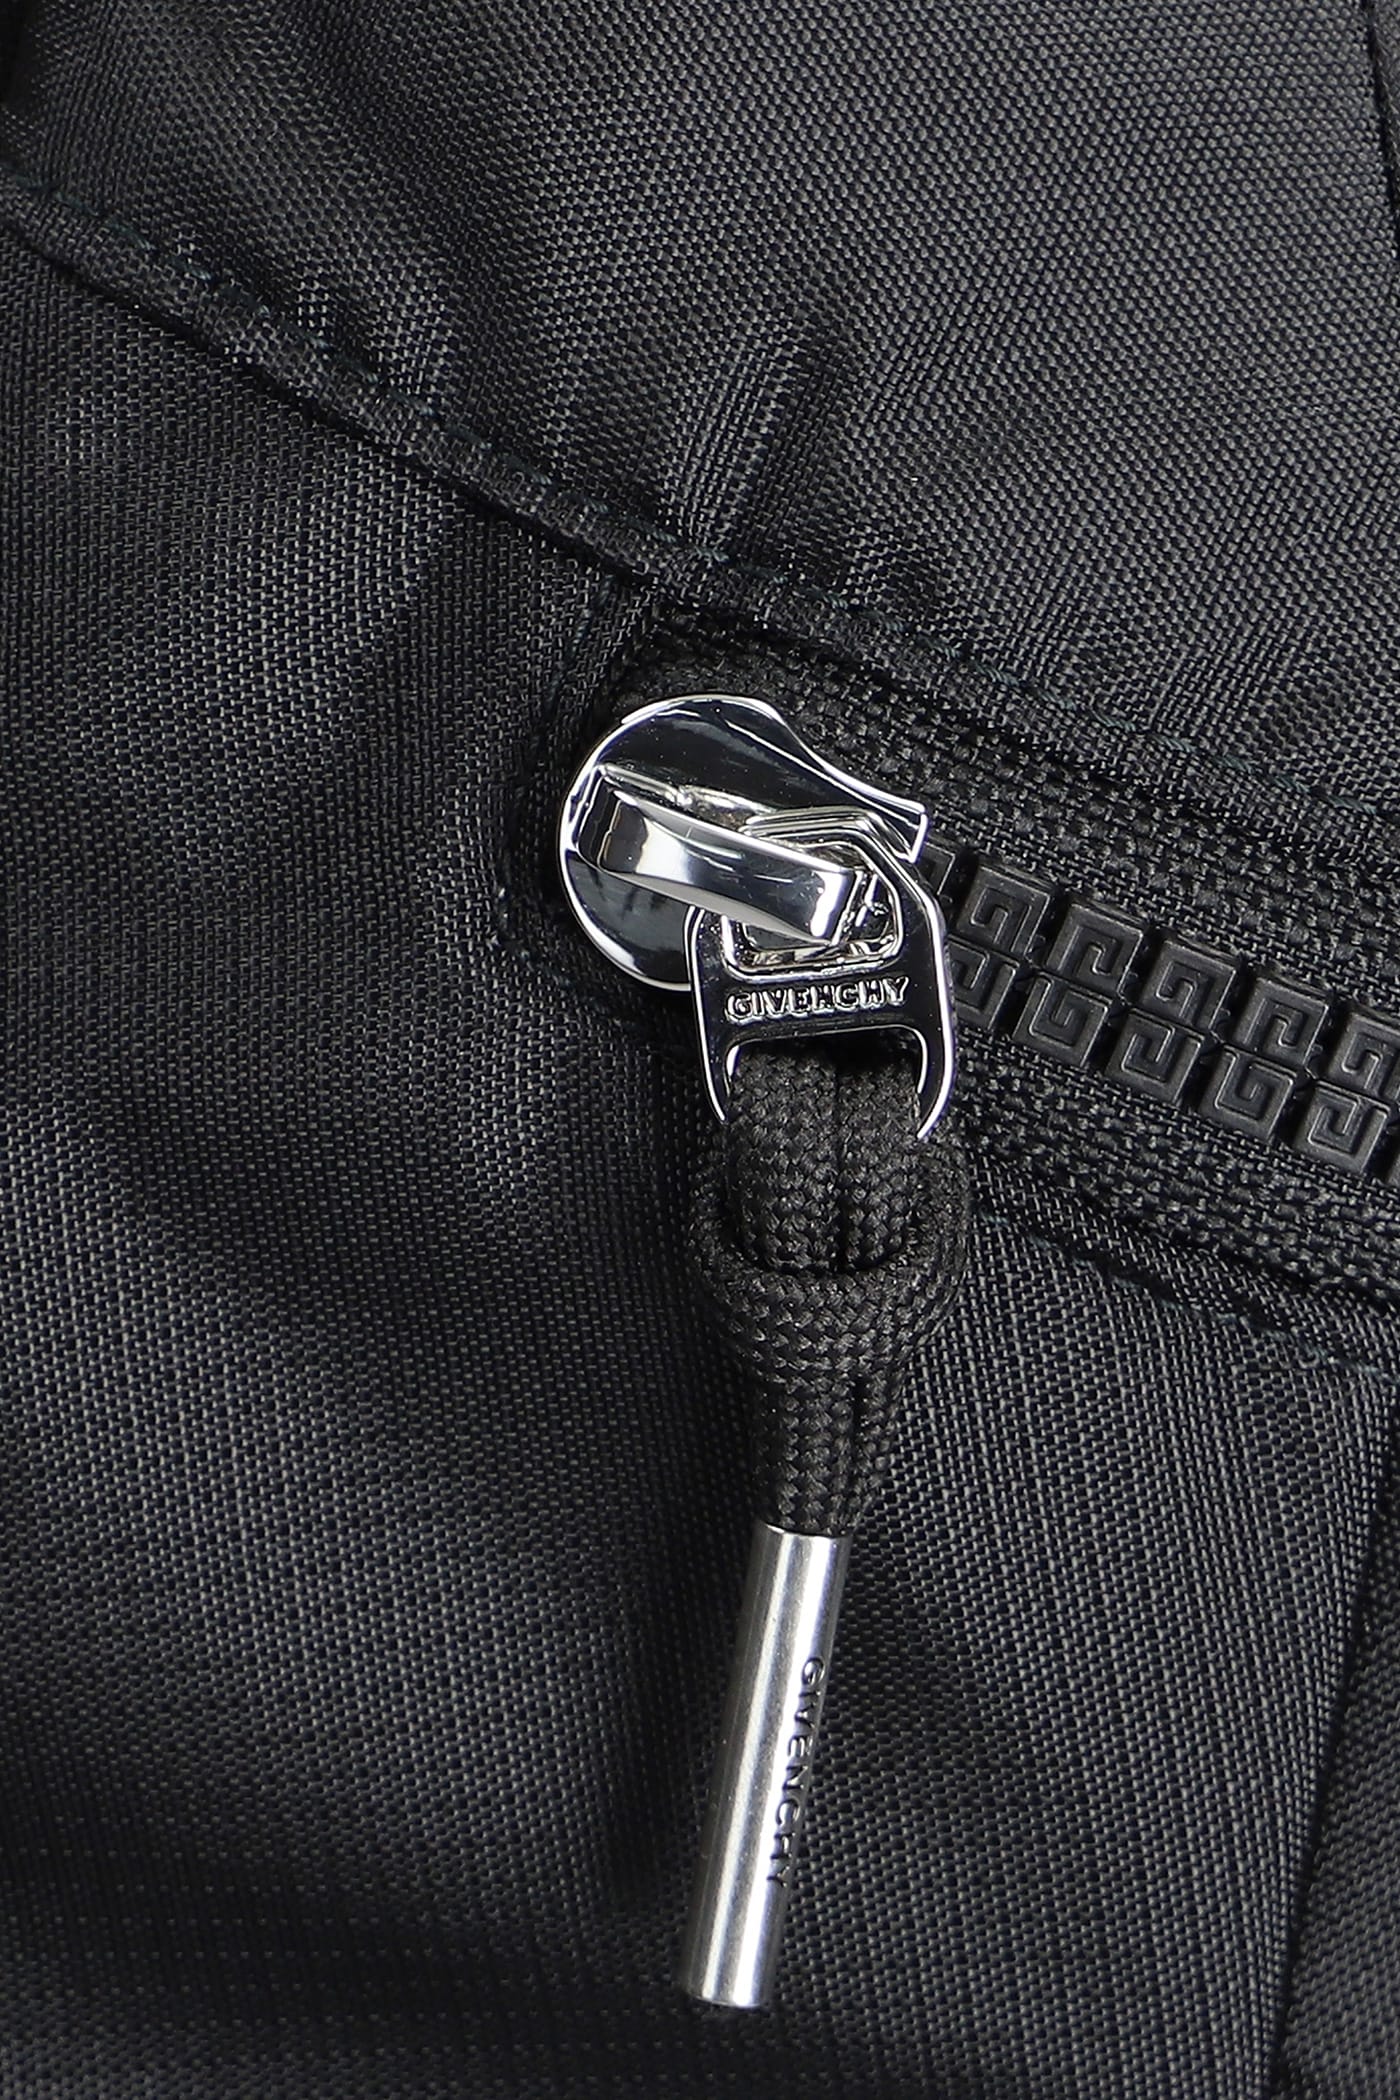 Shop Givenchy Backpack In Black Polyamide